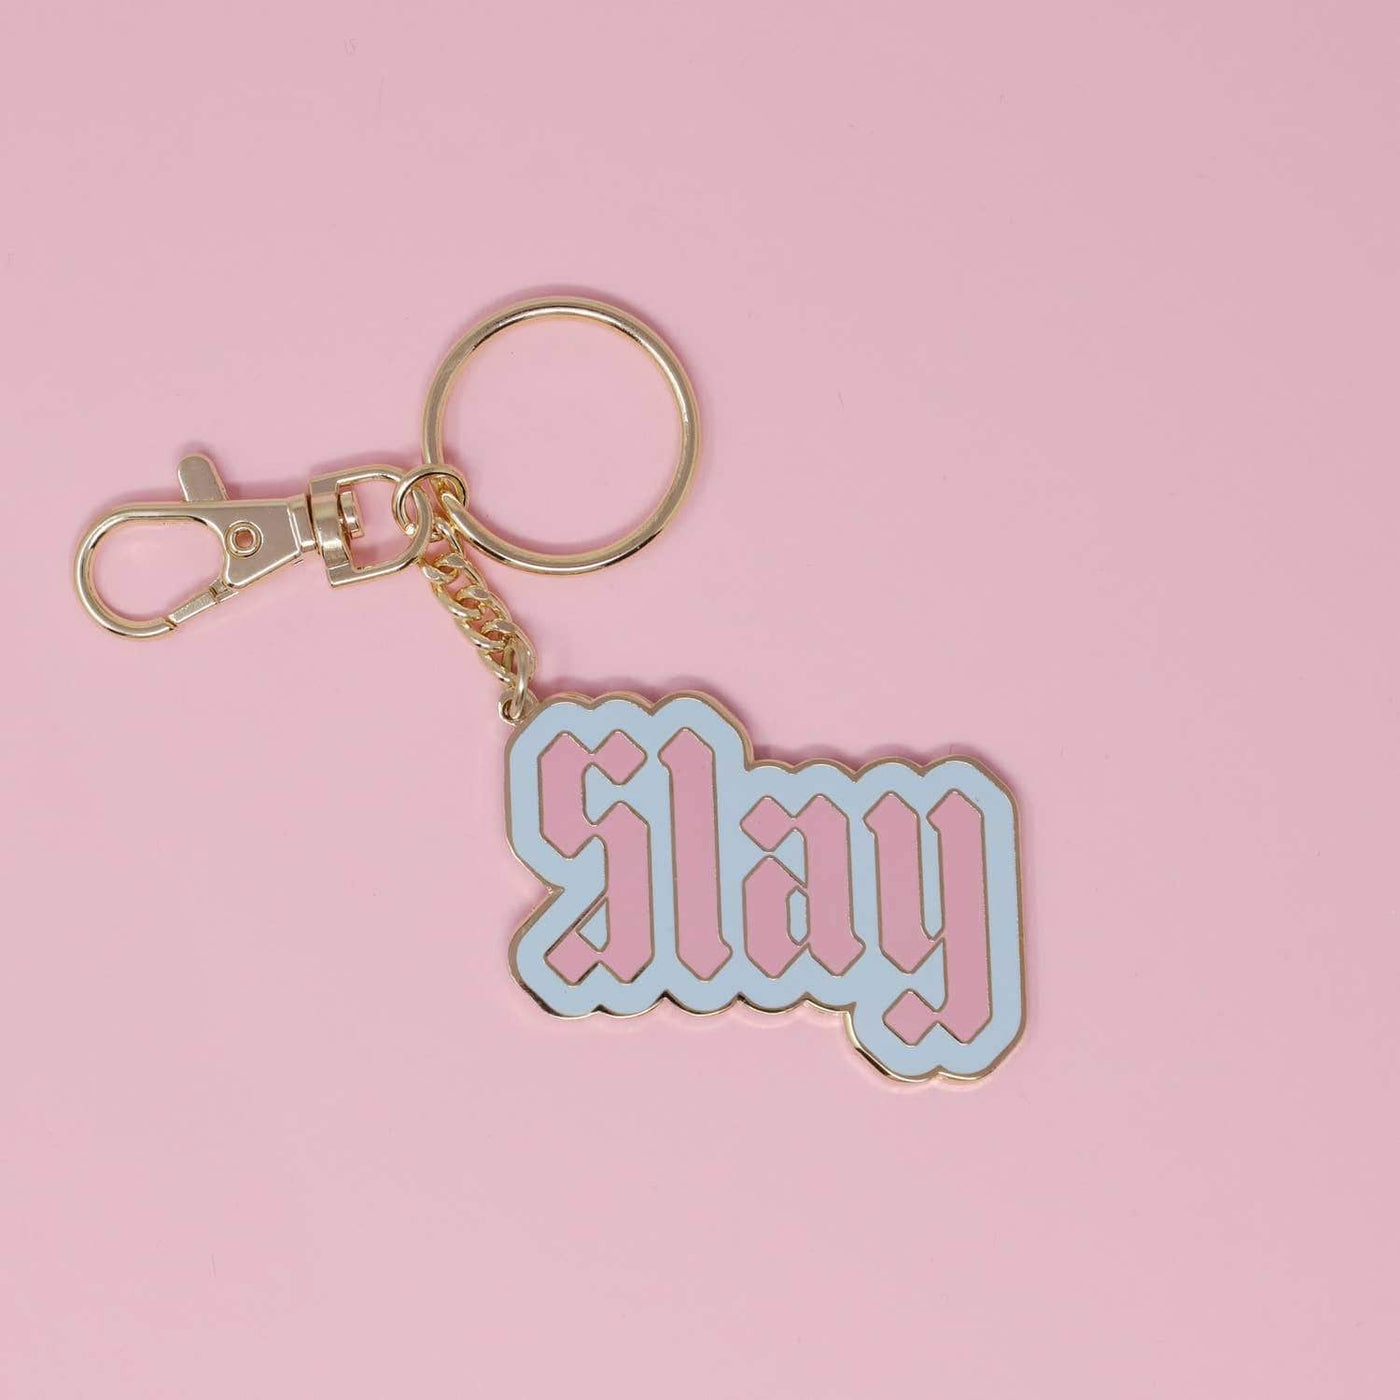 Slay Key Chain